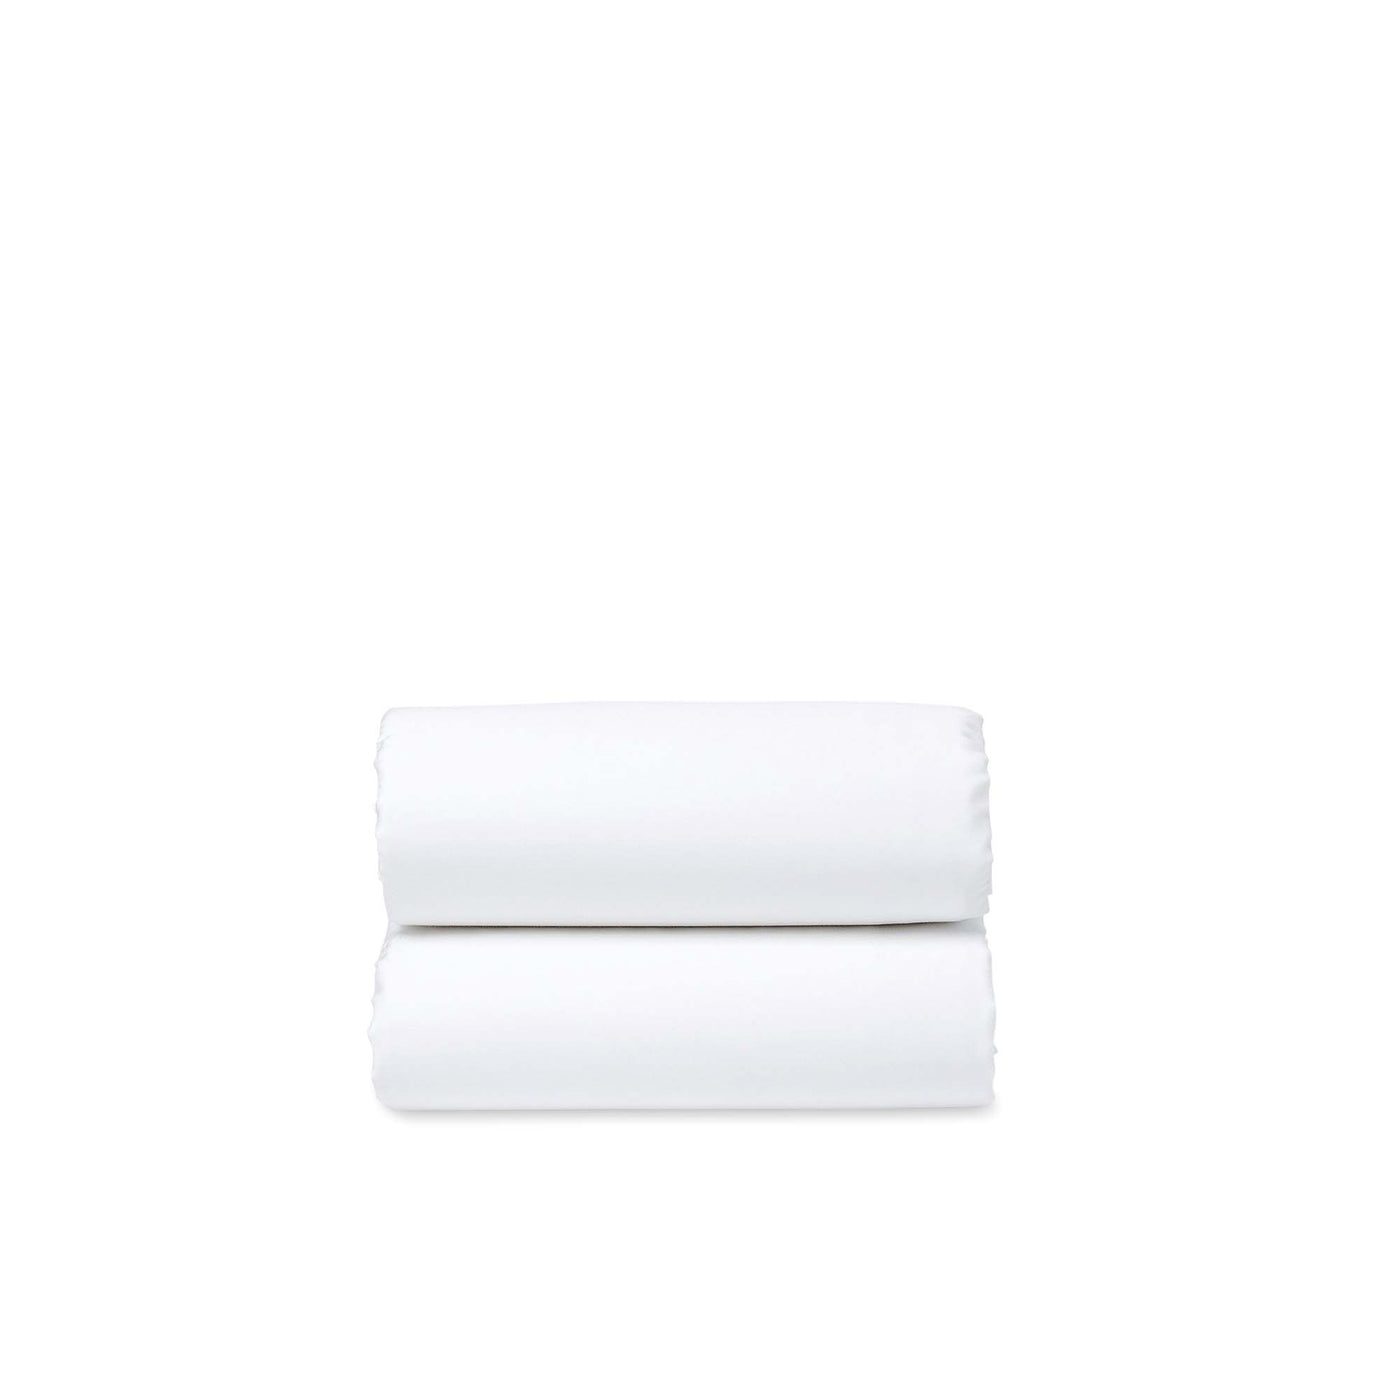 Vermont 200TC Organic Cotton Percale Bed Linen Collection with Envelope Hem Duvet Cover